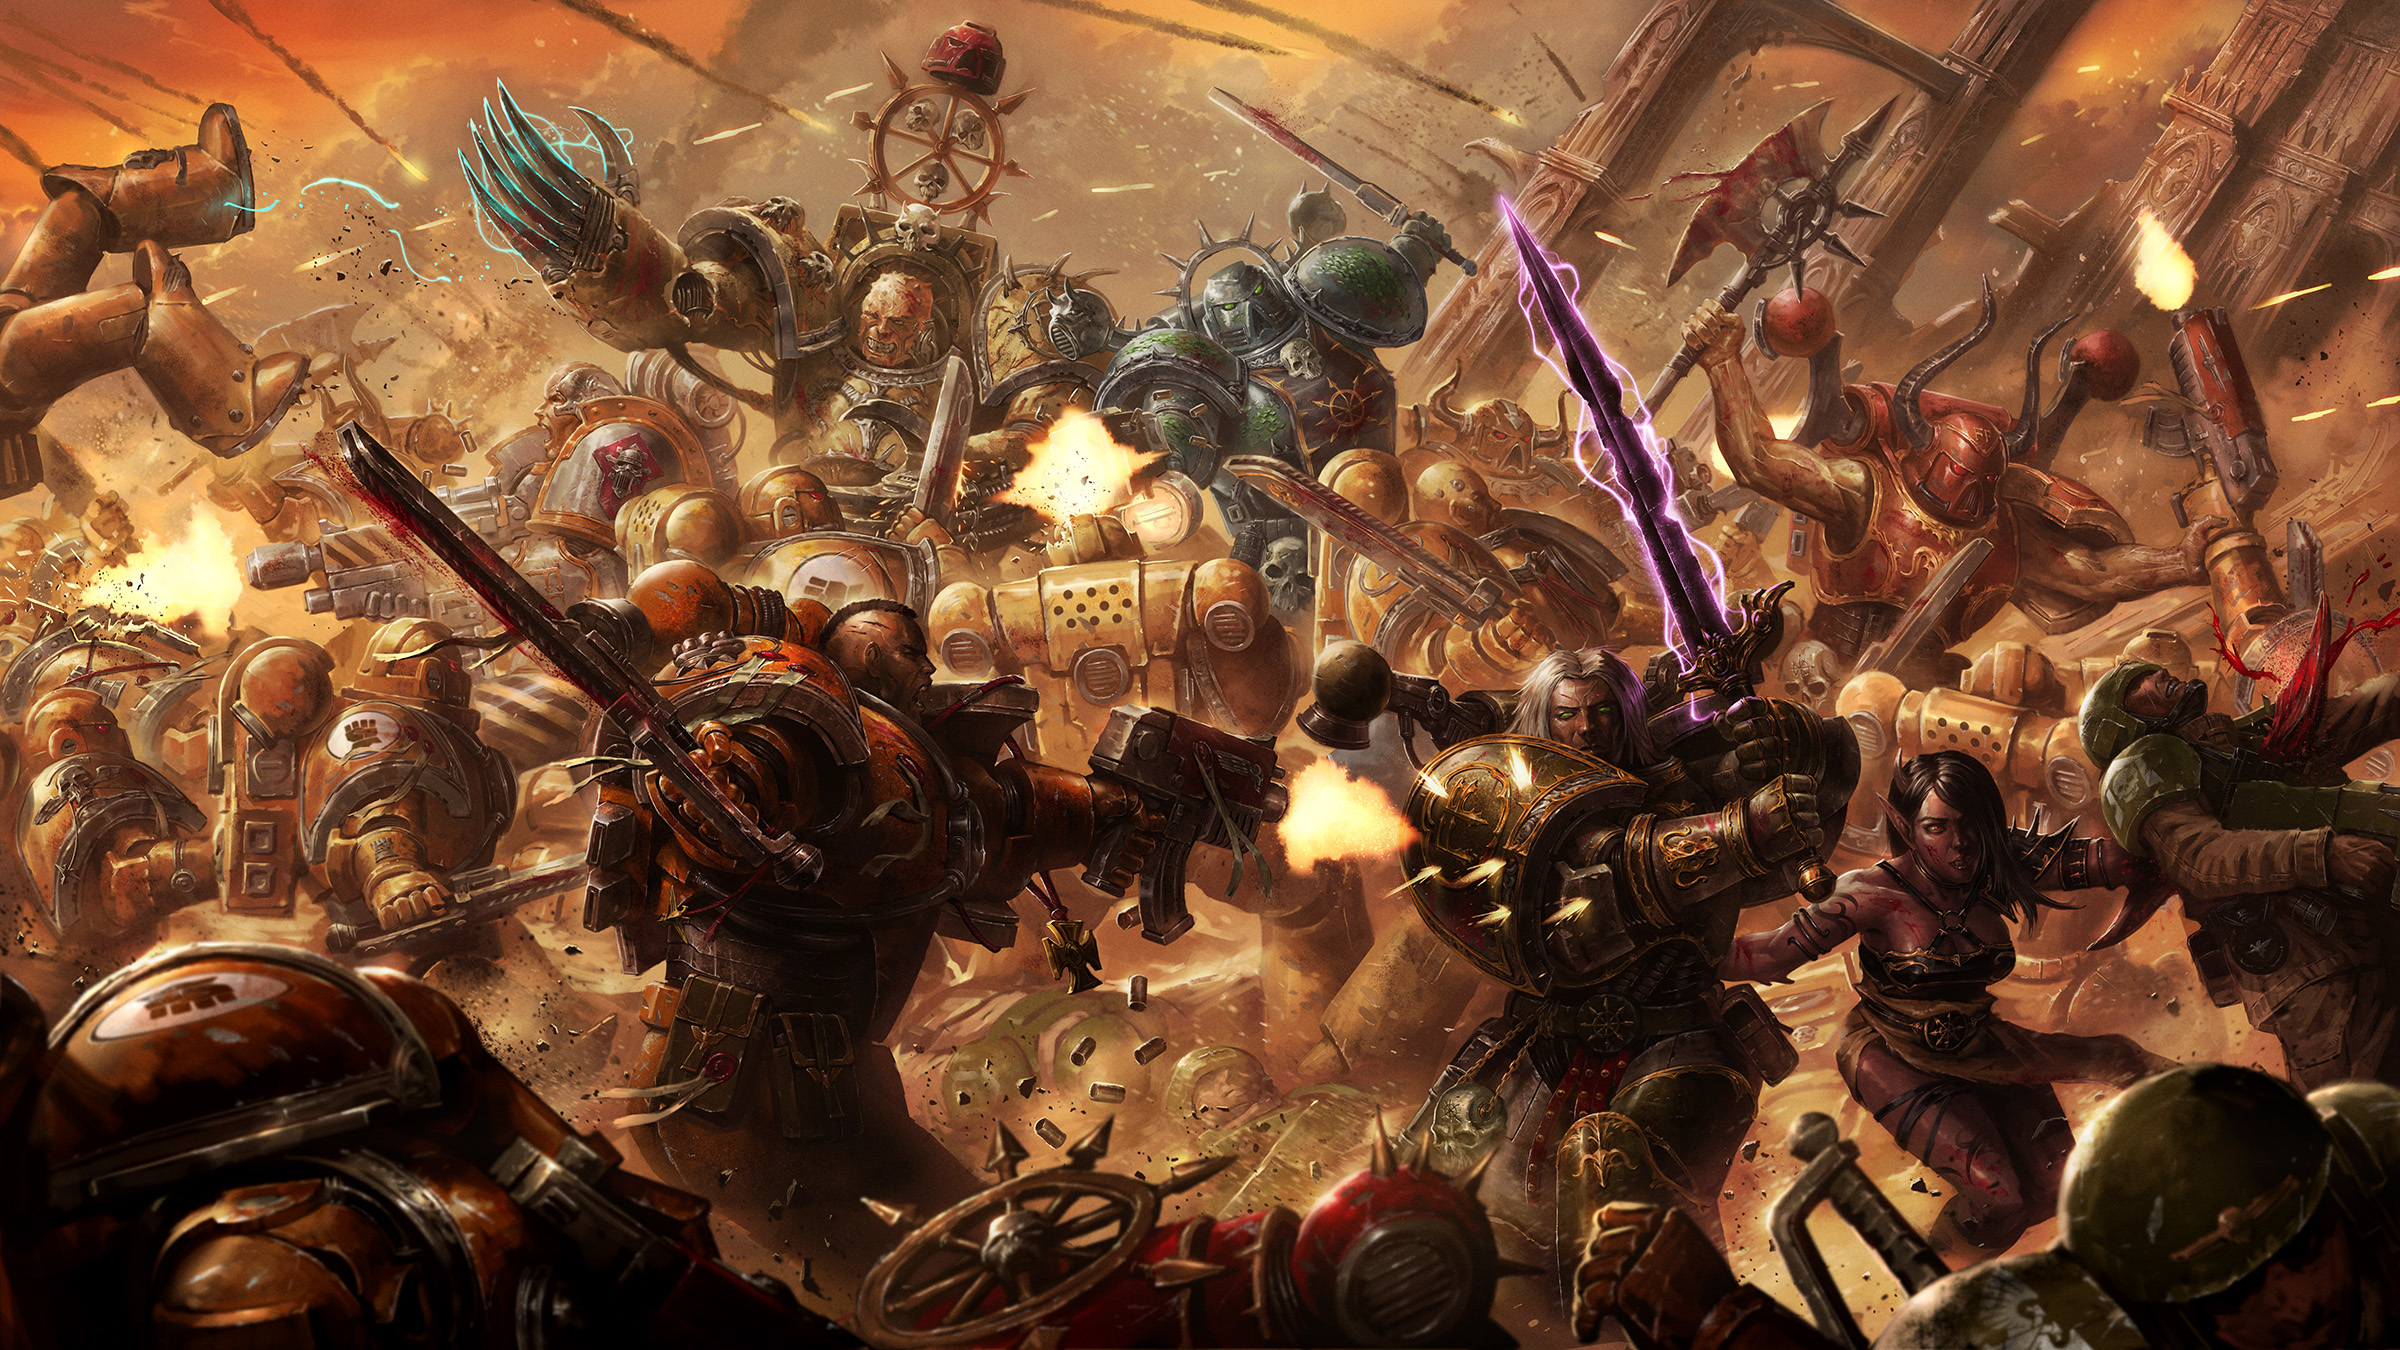 Wallpaper Of Warhammer 40k Background & Hd Image - Warhammer 40k Desktop Background - HD Wallpaper 